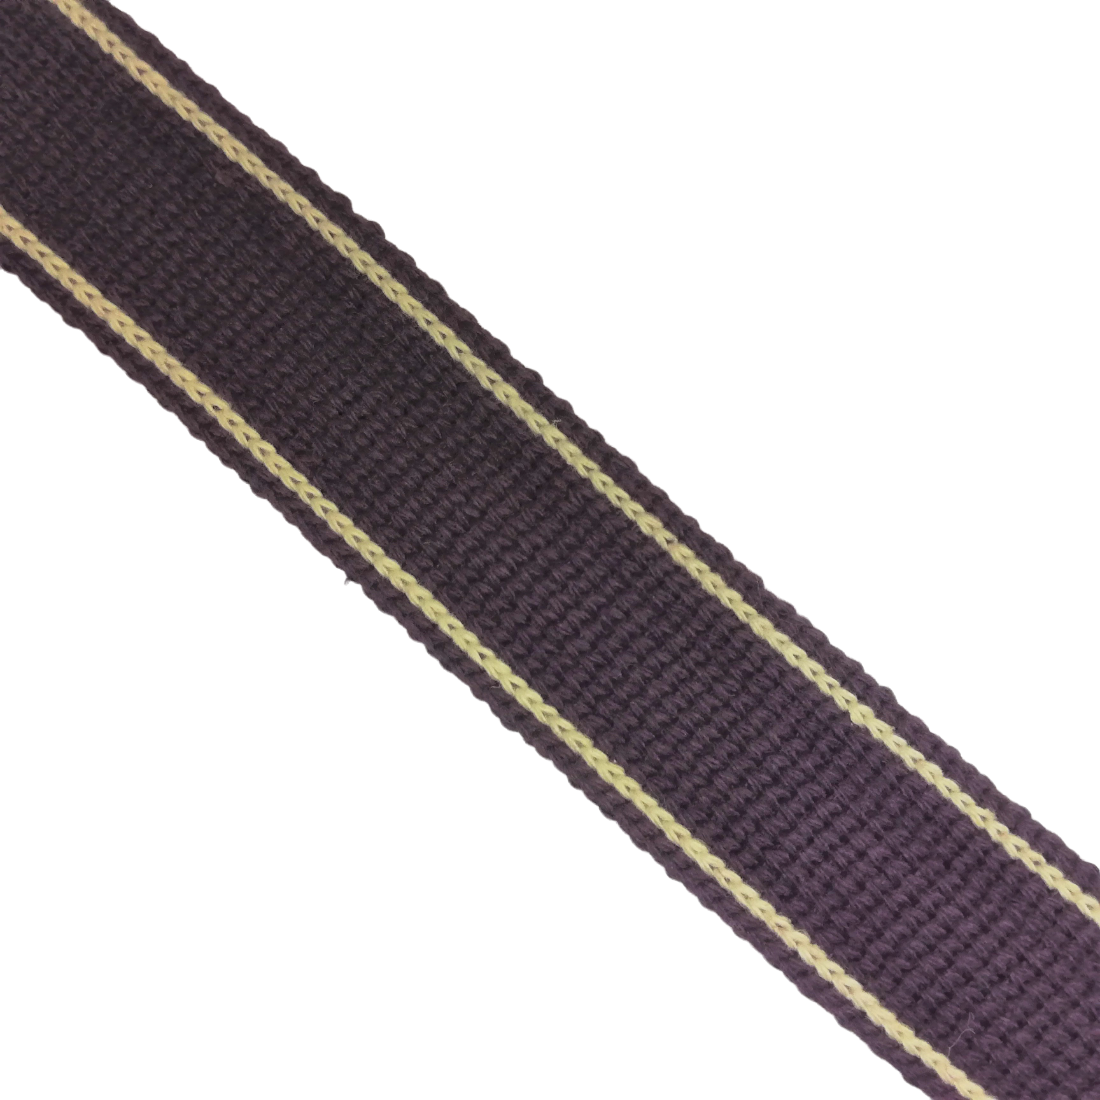 Bag Webbing - 30mm Cotton Blend with Ecru Stripe in Plum Purple